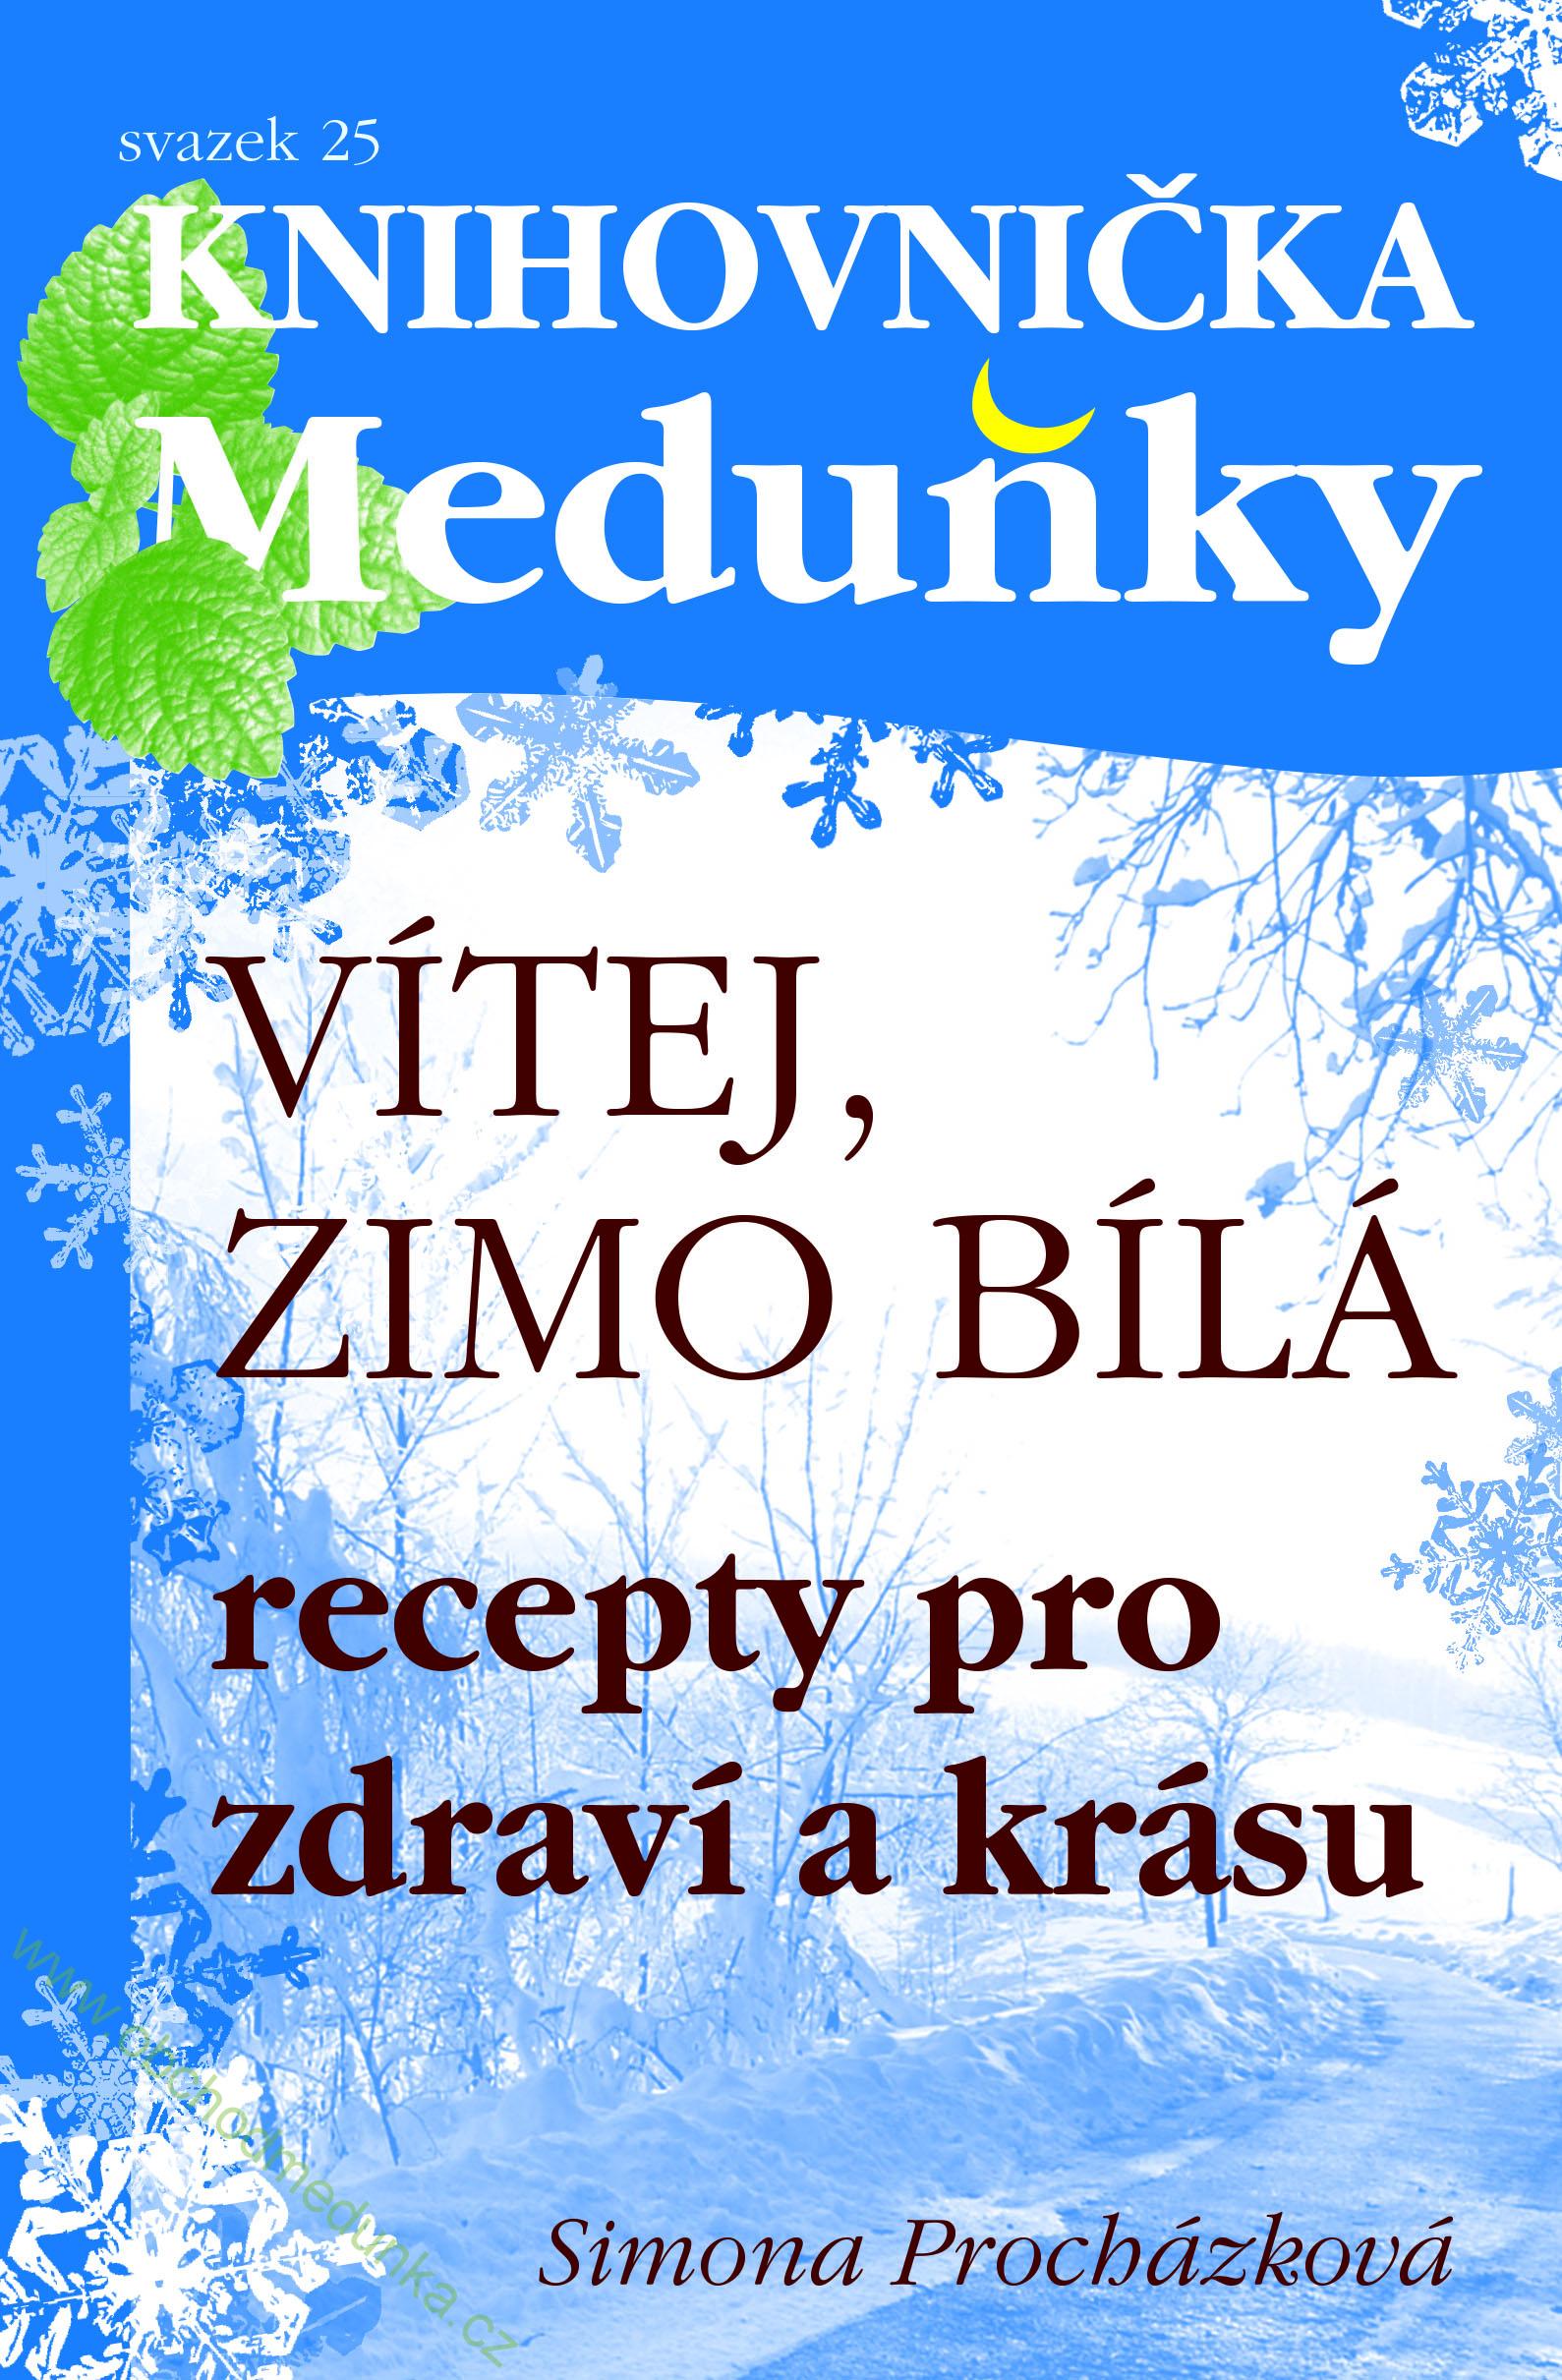 Knihovnička Meduňky 25 - Vítej, zimo bílá recepty pro zdraví a krásu: Simona Procházková